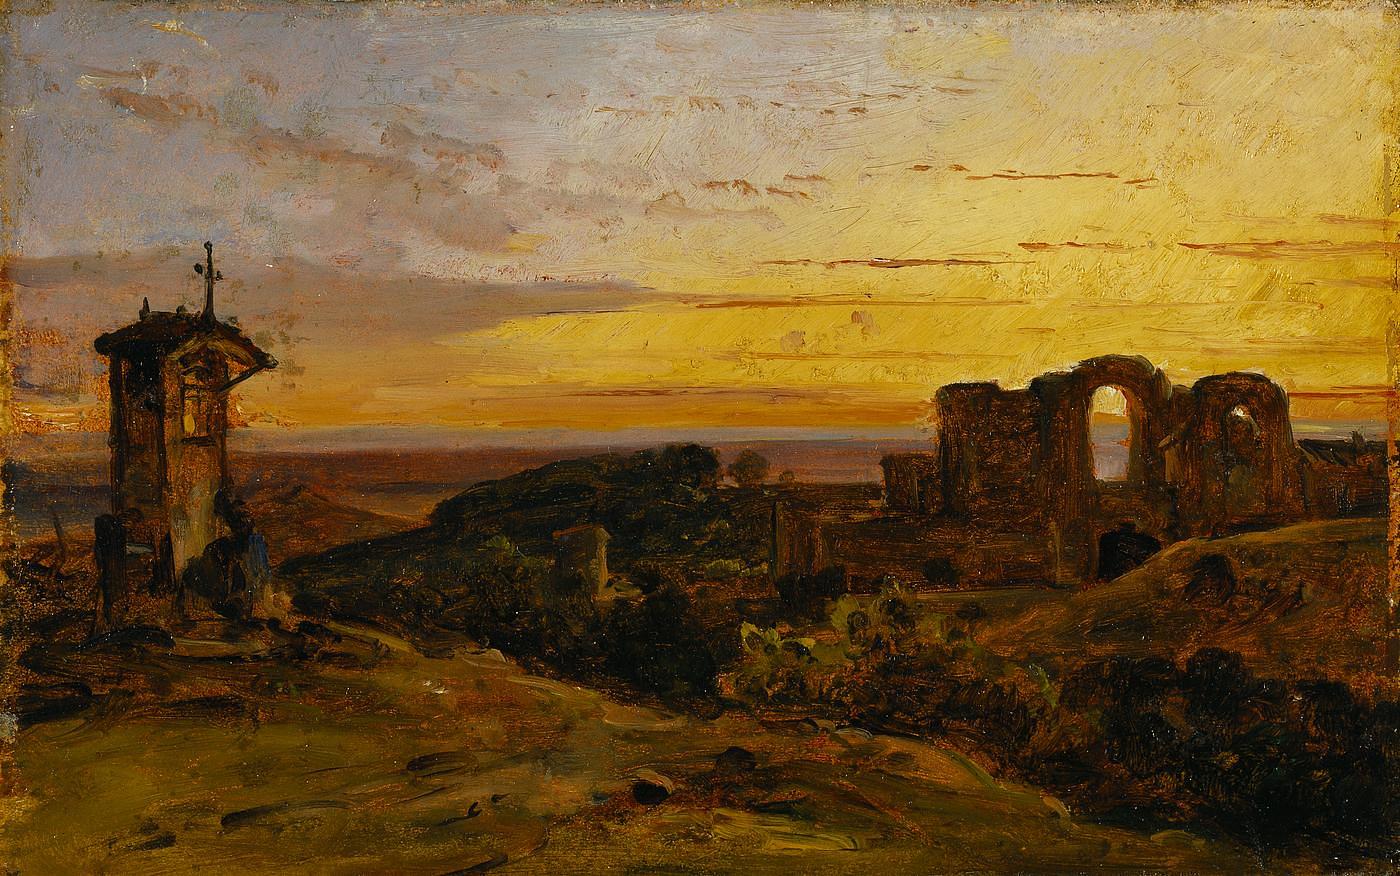 Landscape at Sunset, B112